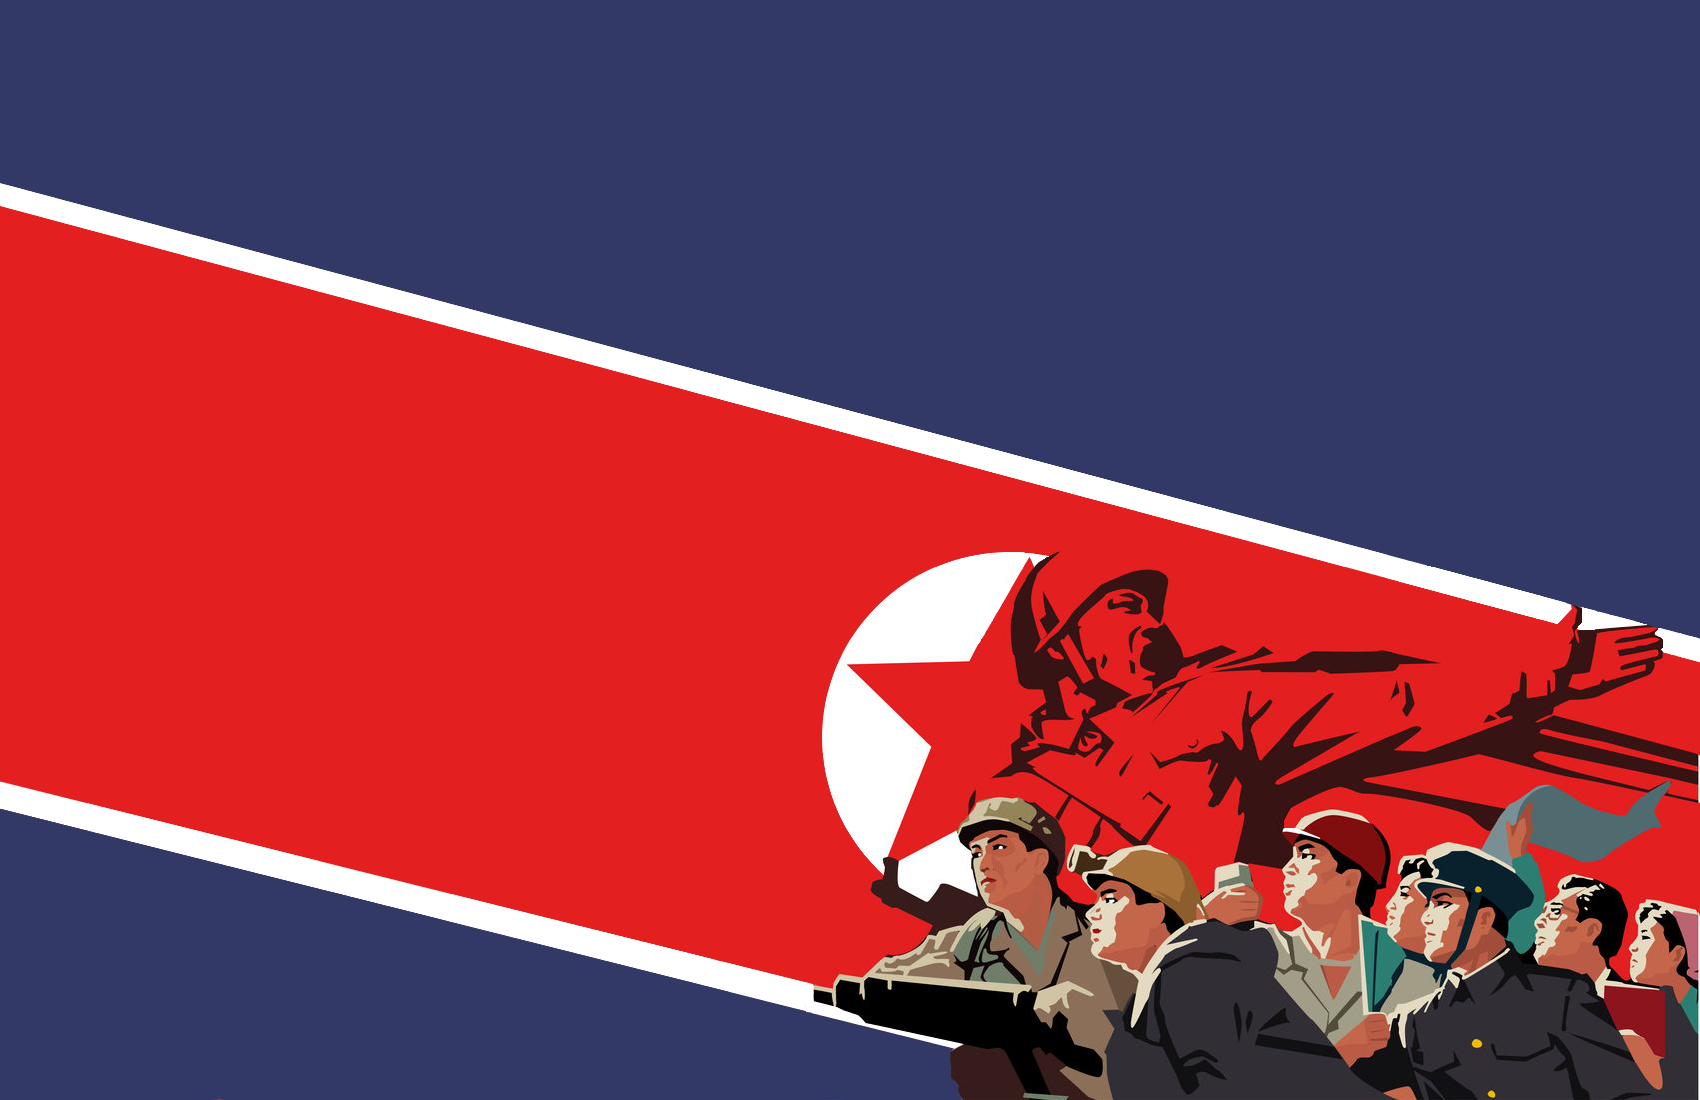 North Korean Wallpaper RedditLurker All Reddit Images